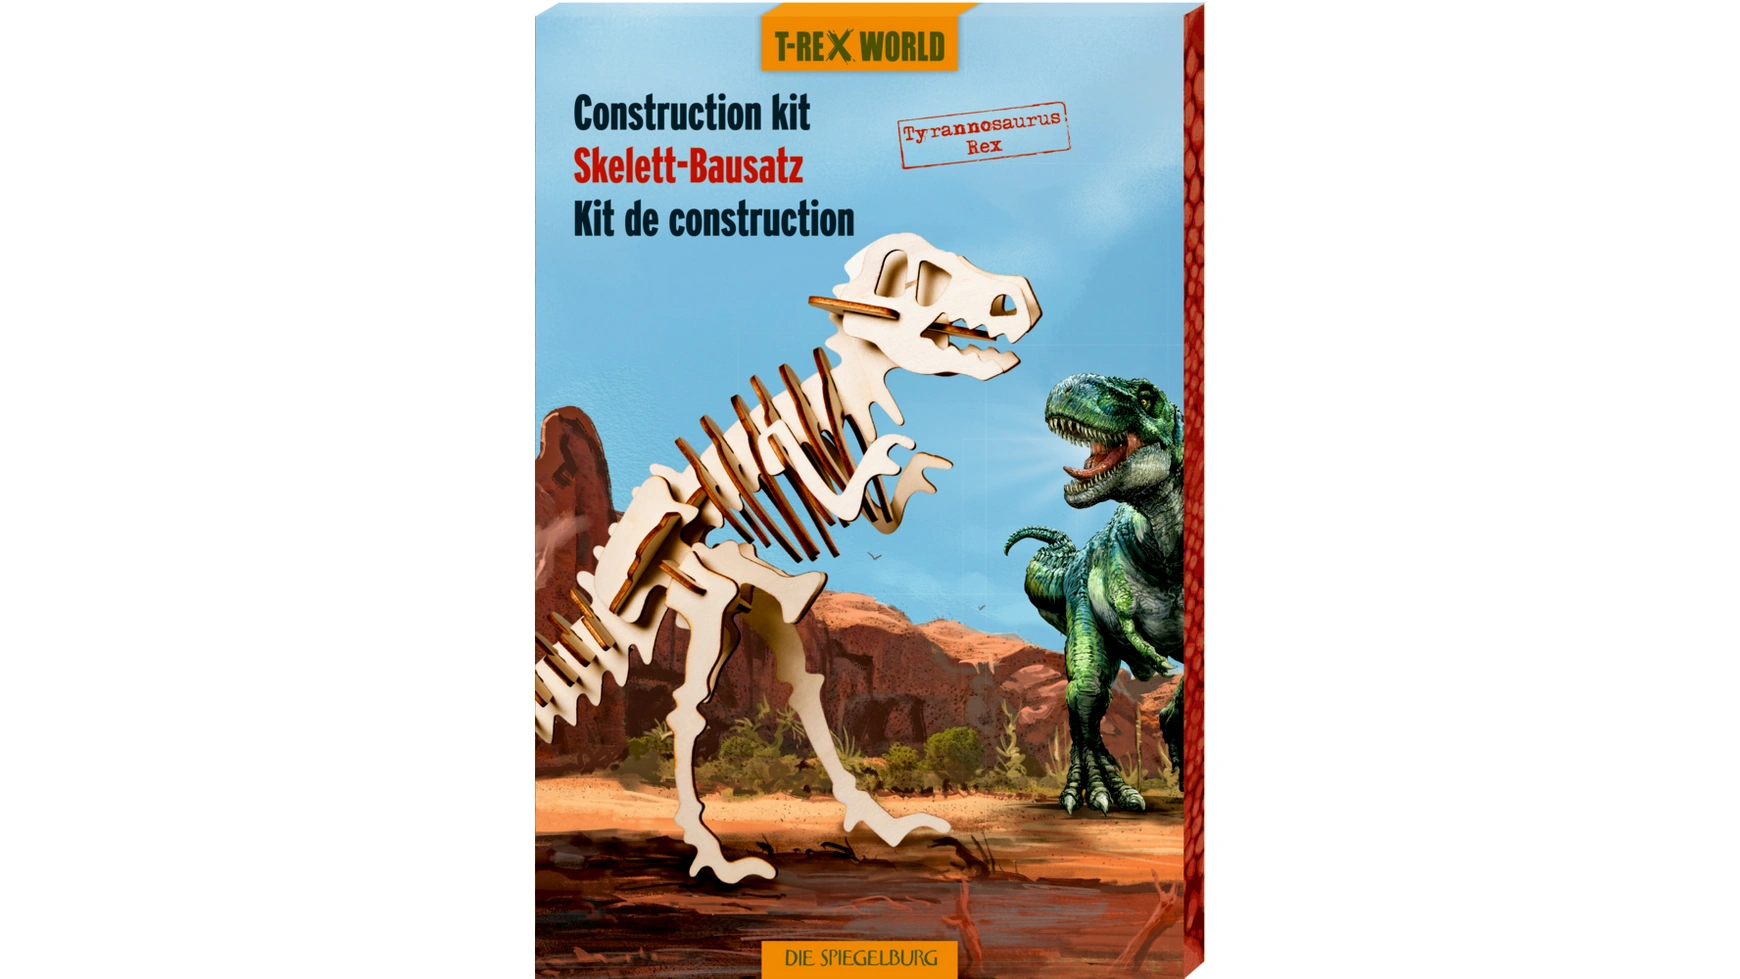 Die Spiegelburg набор скелетов тираннозавра рекса T-Rex World